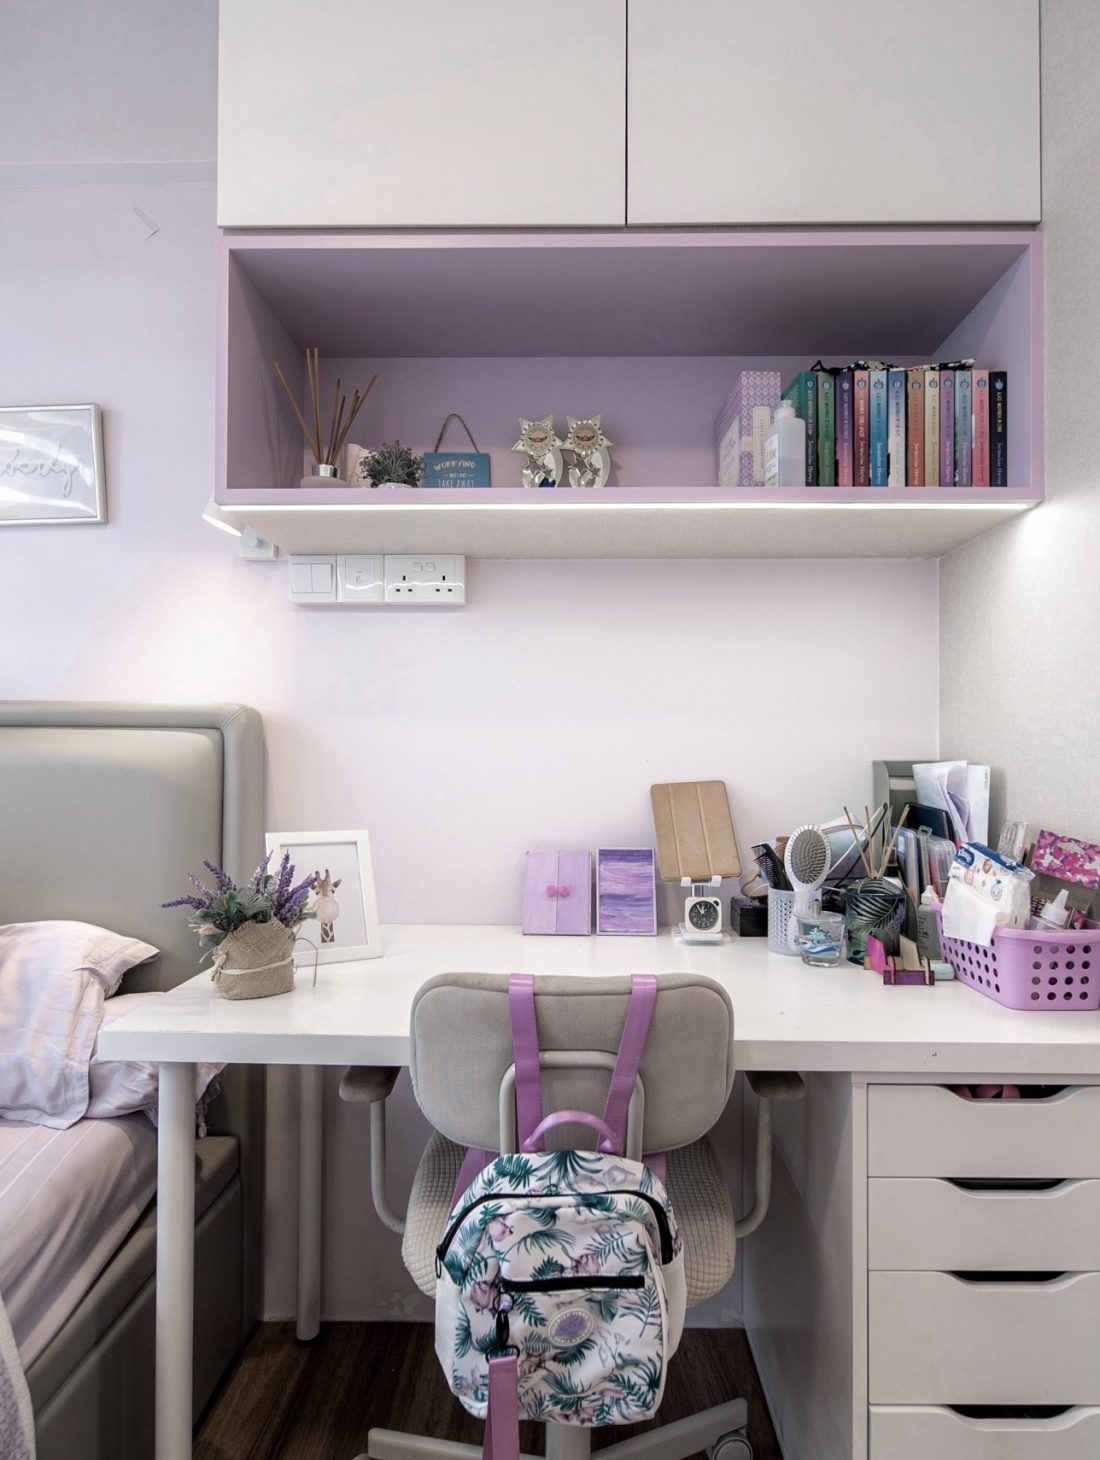 Bishan St 13 HDB resale girl bedroom in purple with custom study desk